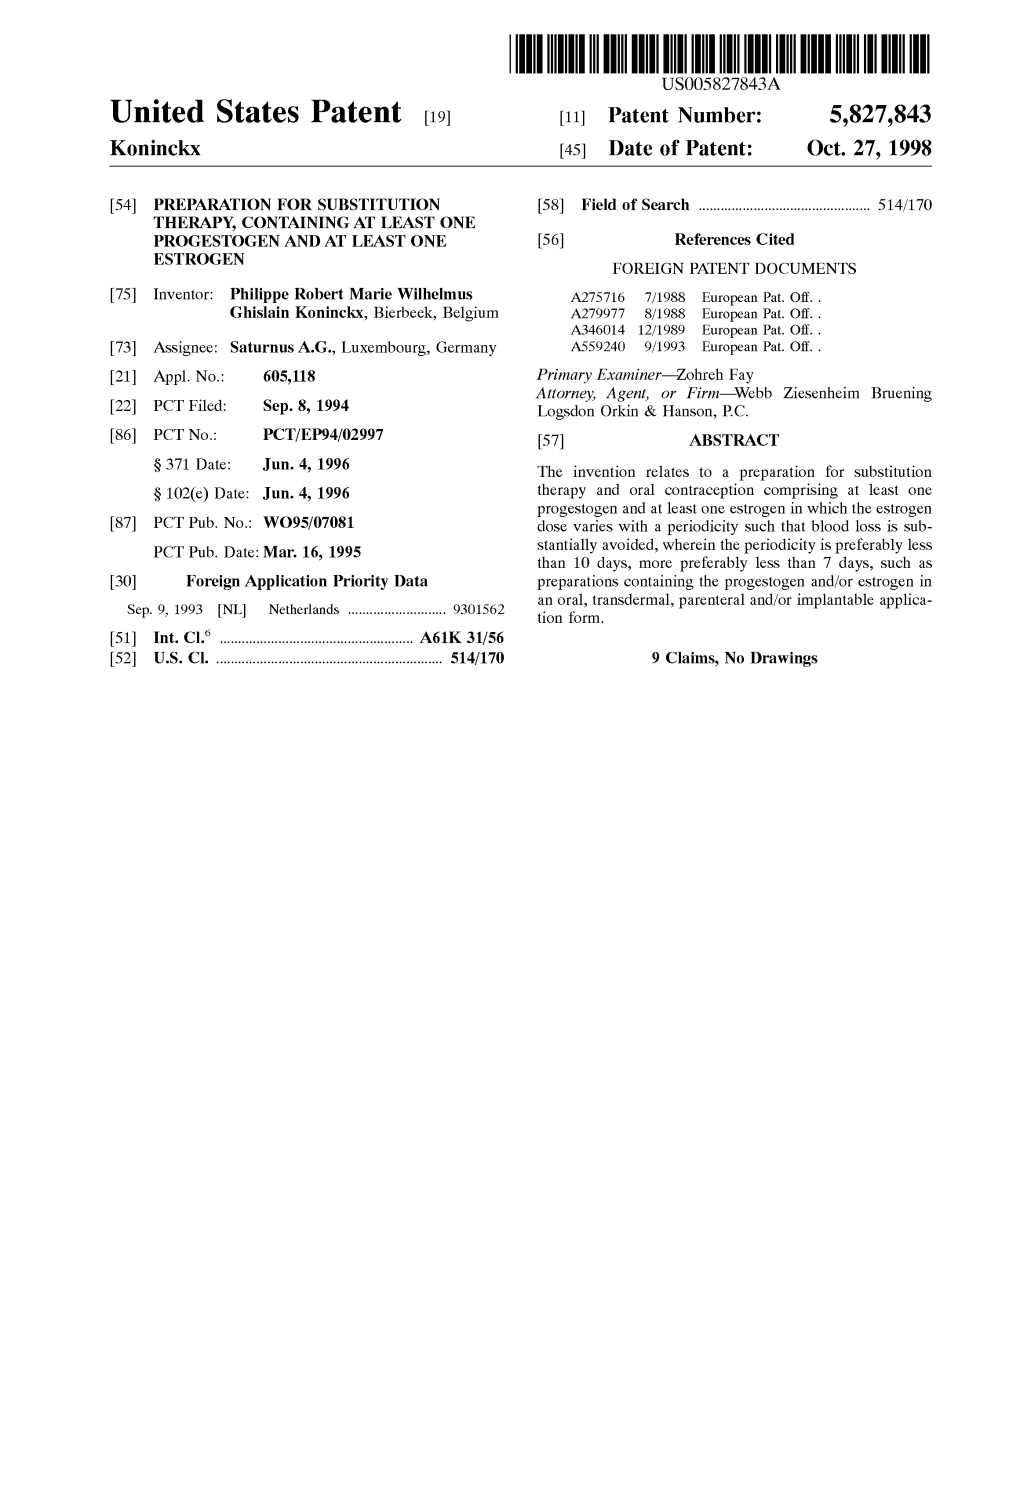 United States Patent (19) 11 Patent Number: 5,827,843 Koninckx (45) Date of Patent: Oct